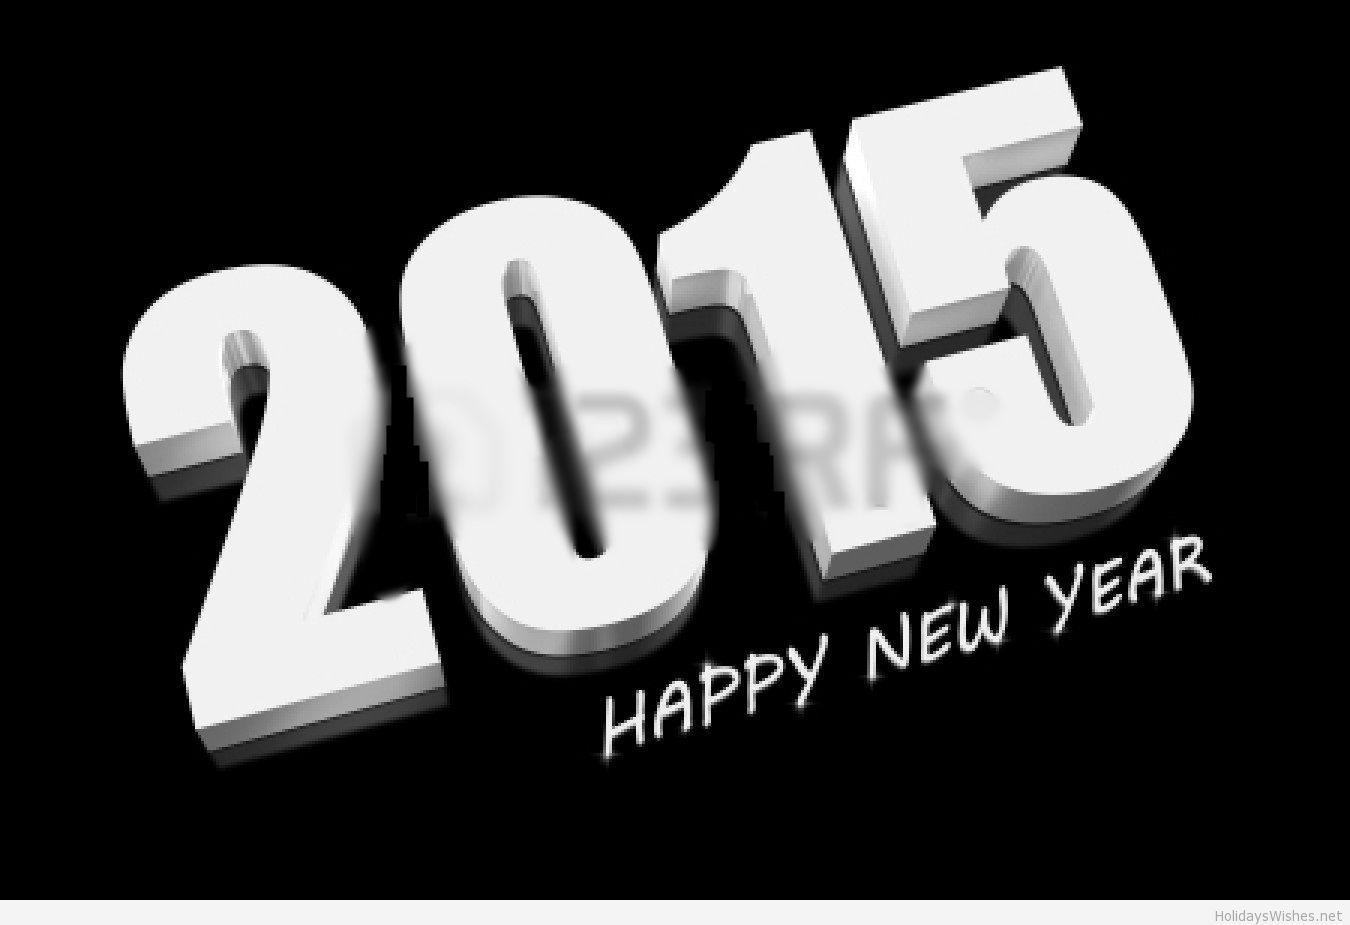 Happy new year 2015 HD wallpaper free